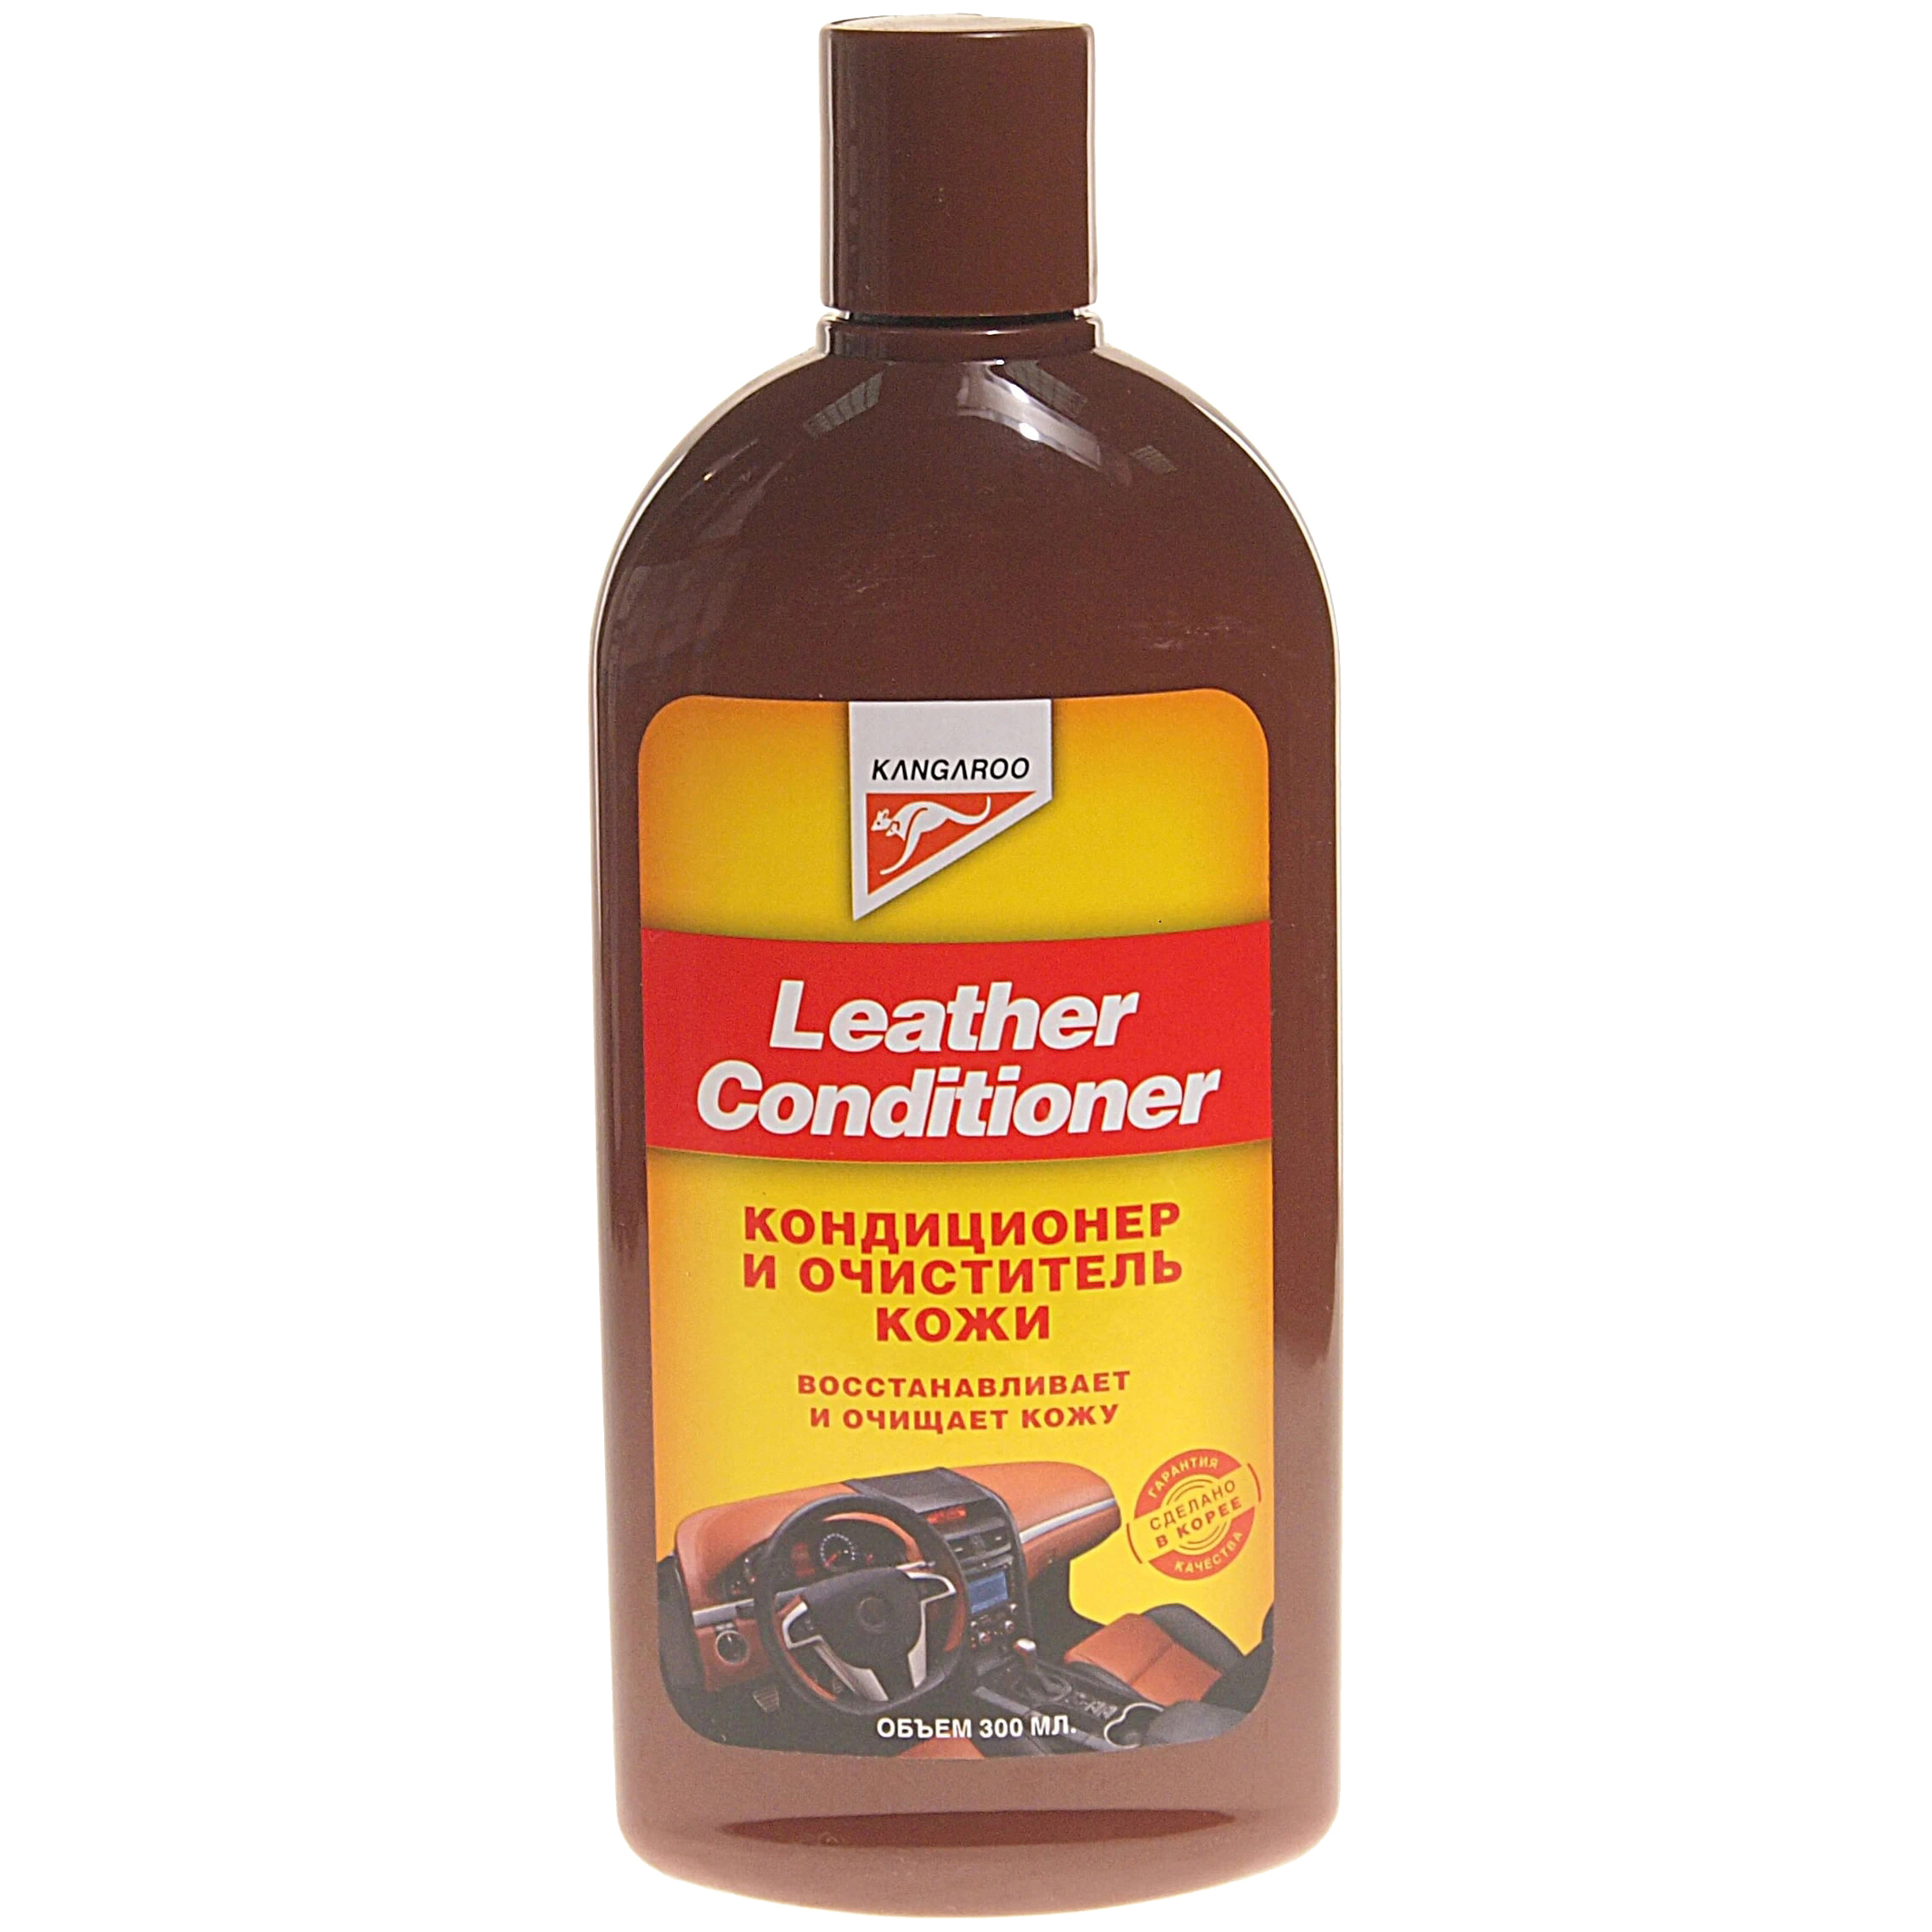 Кондиционер Для Кожи Leather Conditioner, 300Мл KANGAROO 250607